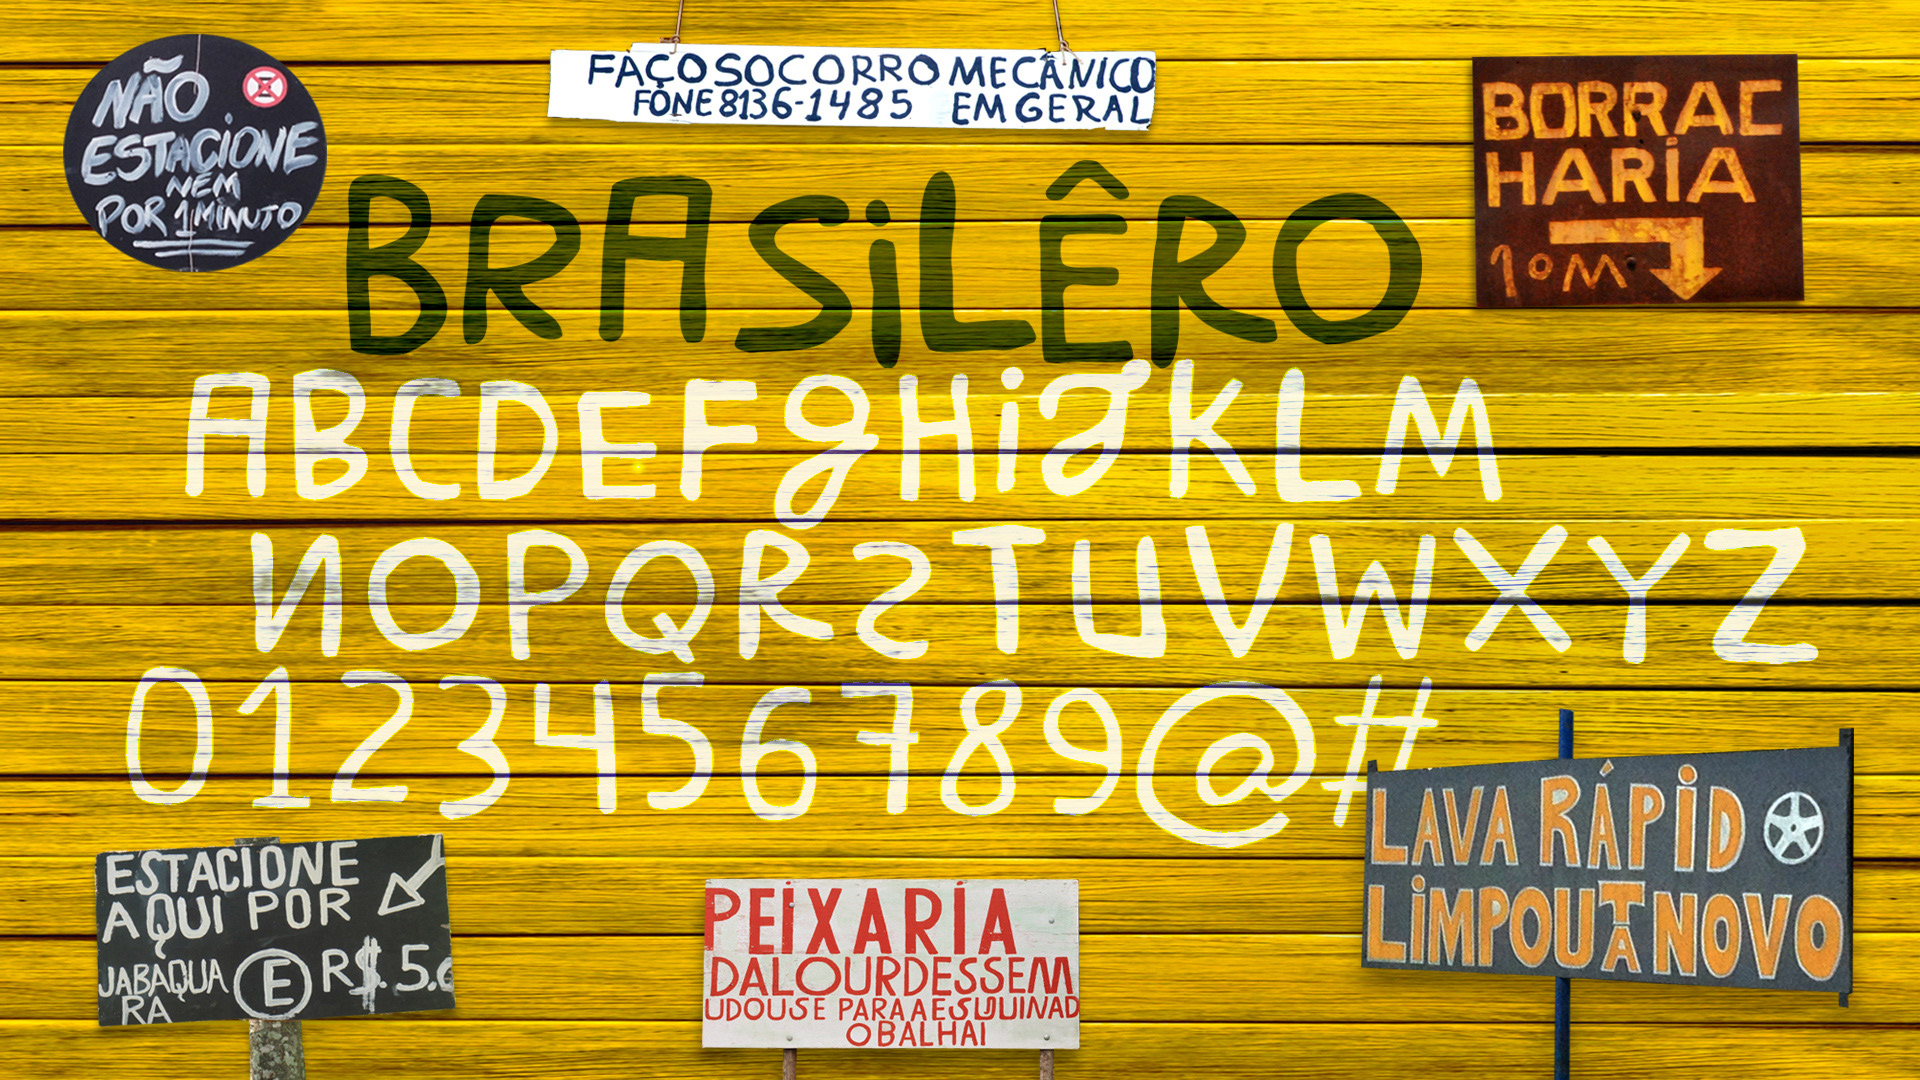 Typography: Brasilro Profia Distinguished Brazilian Typefaces